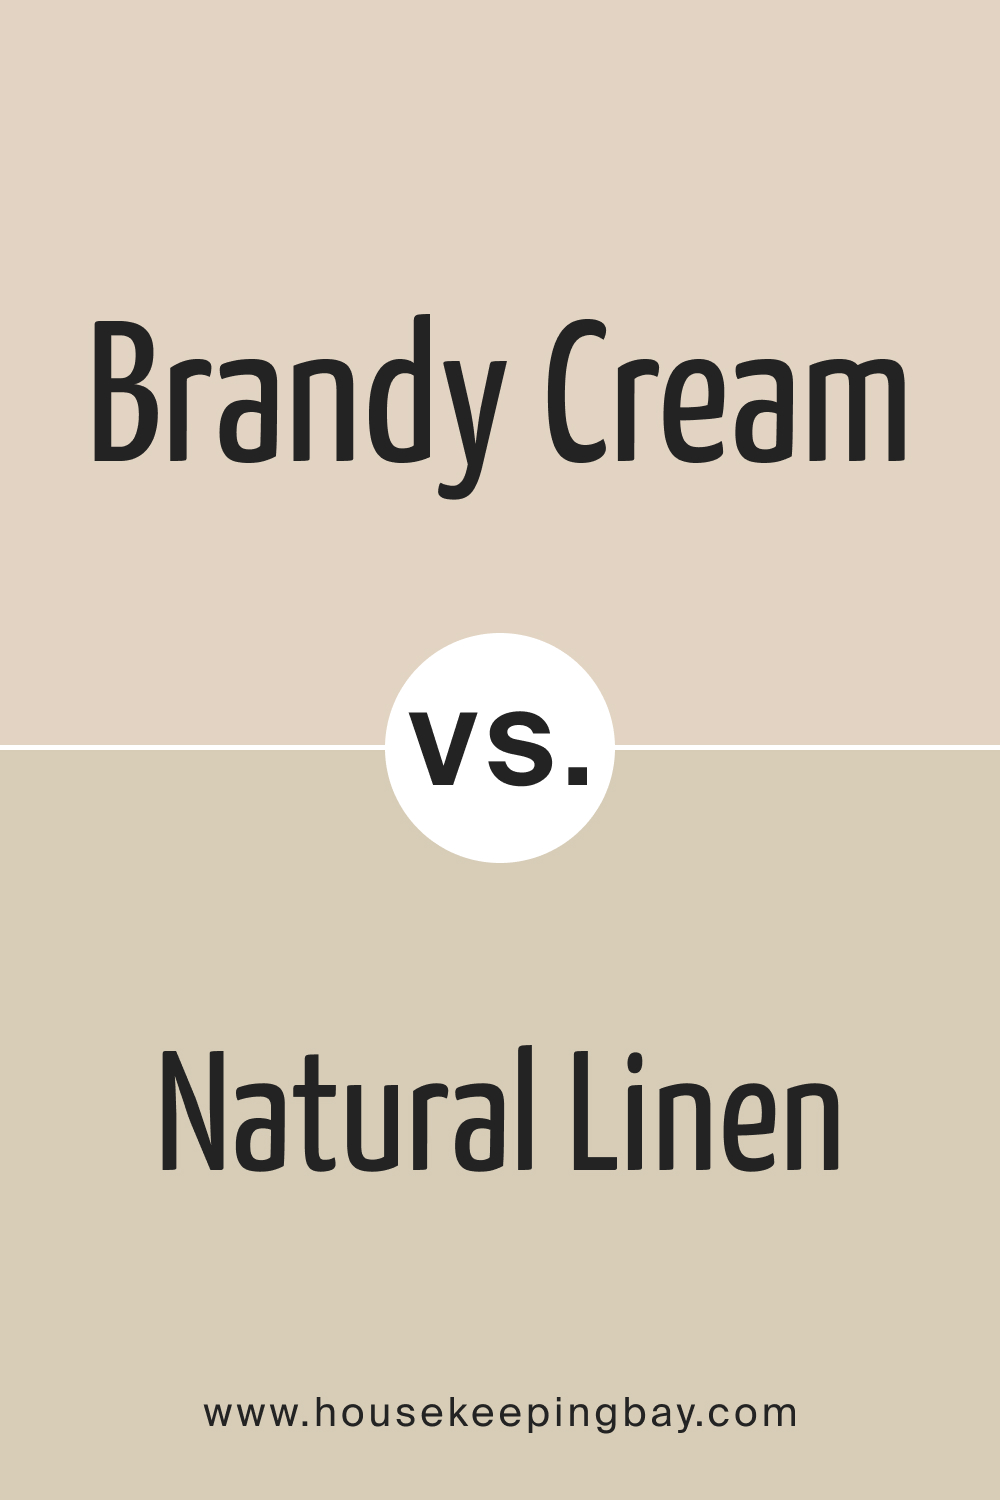 Brandy Cream OC 4 vs. BM Natural Linen 966